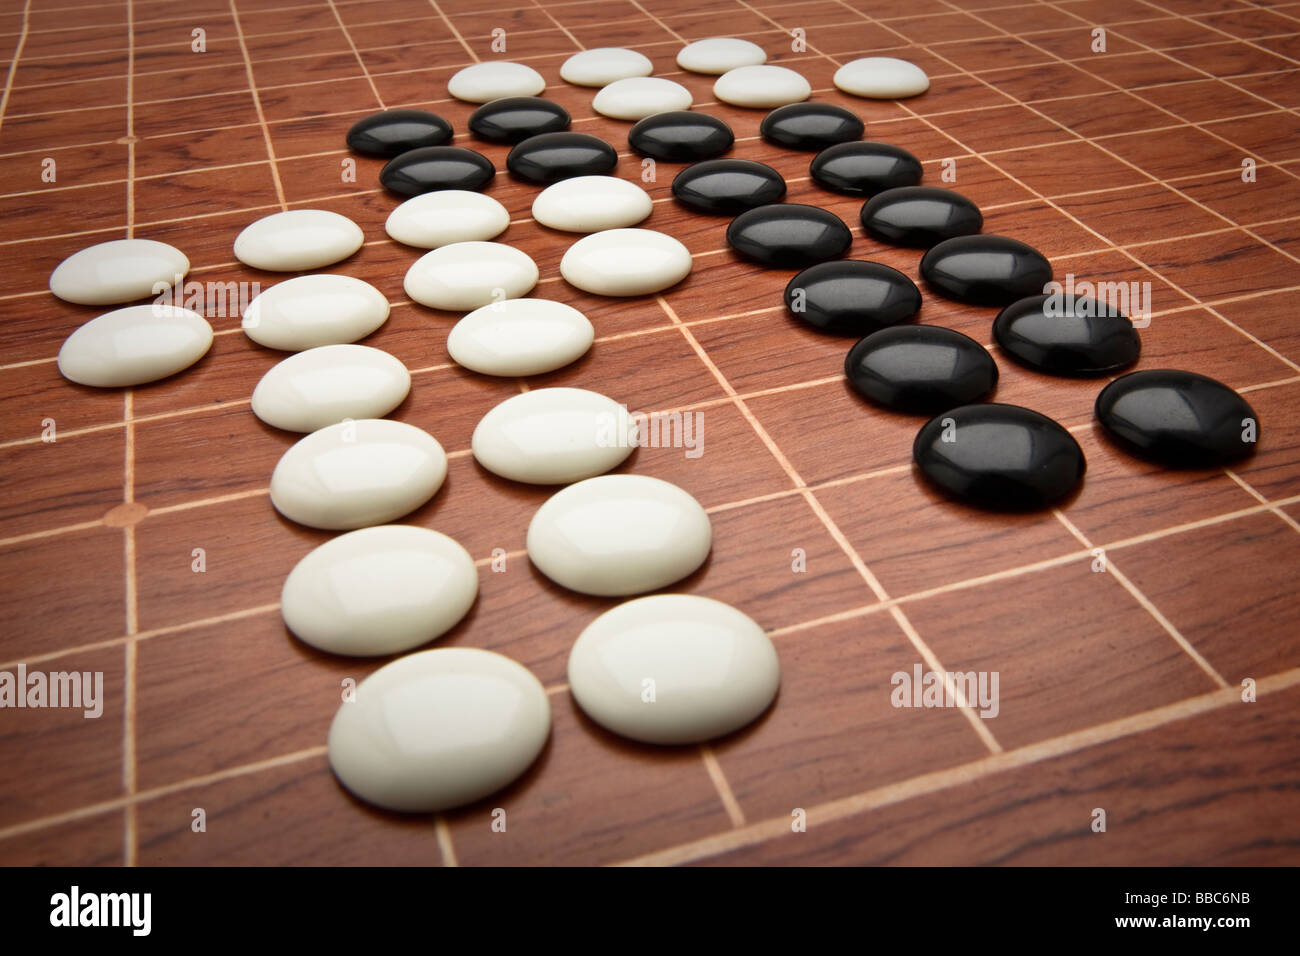 Chinese Checker Board